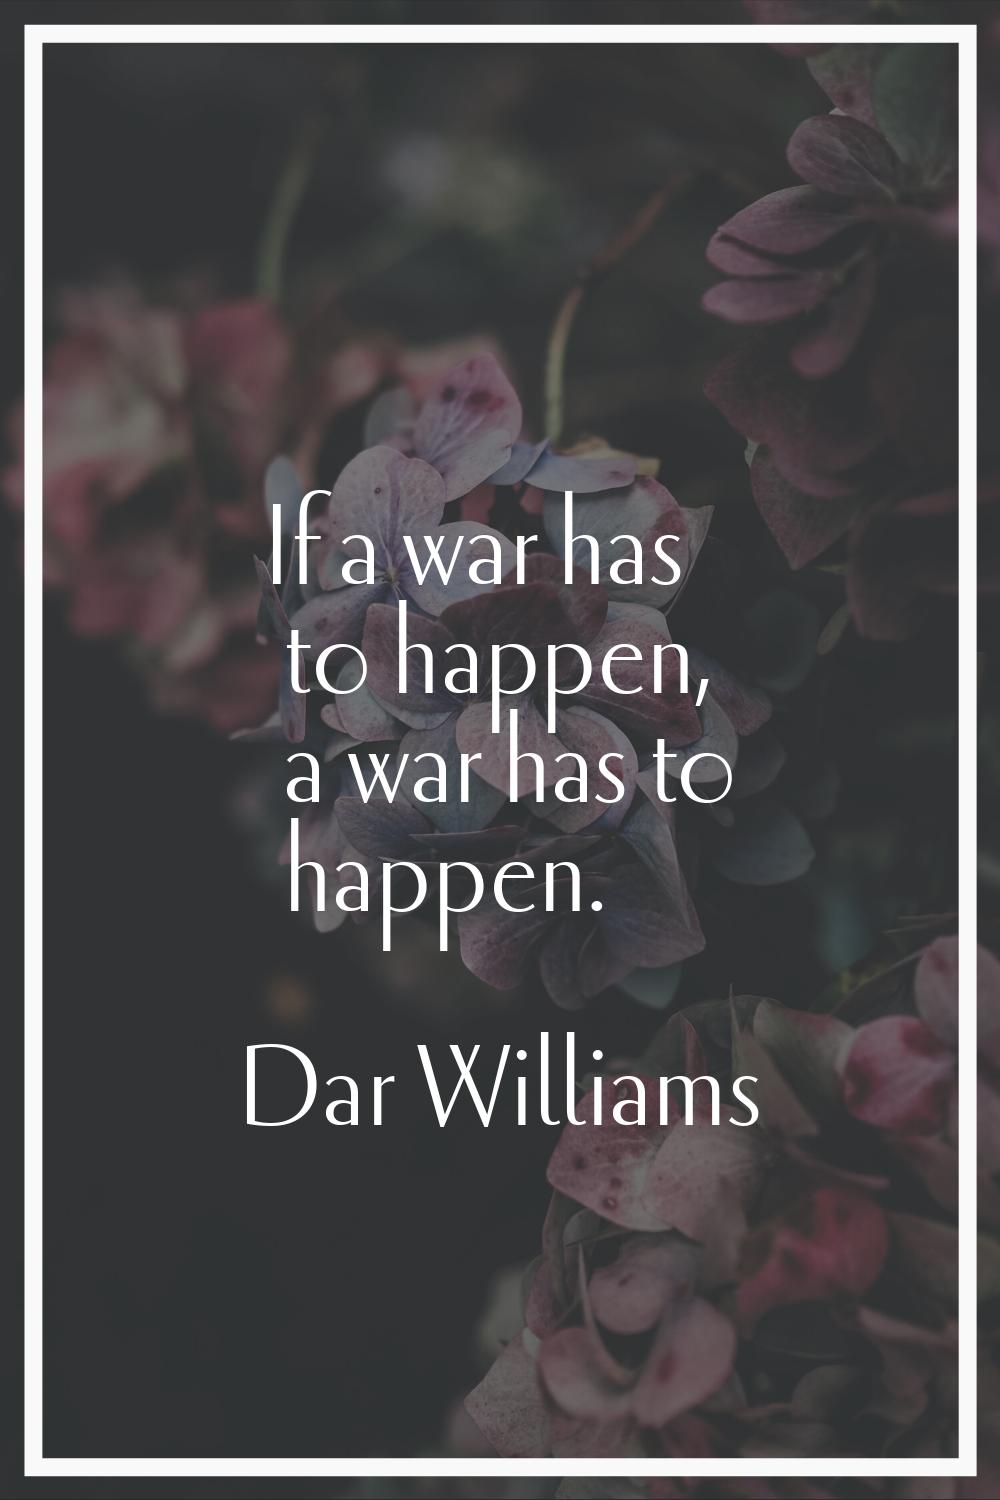 If a war has to happen, a war has to happen.